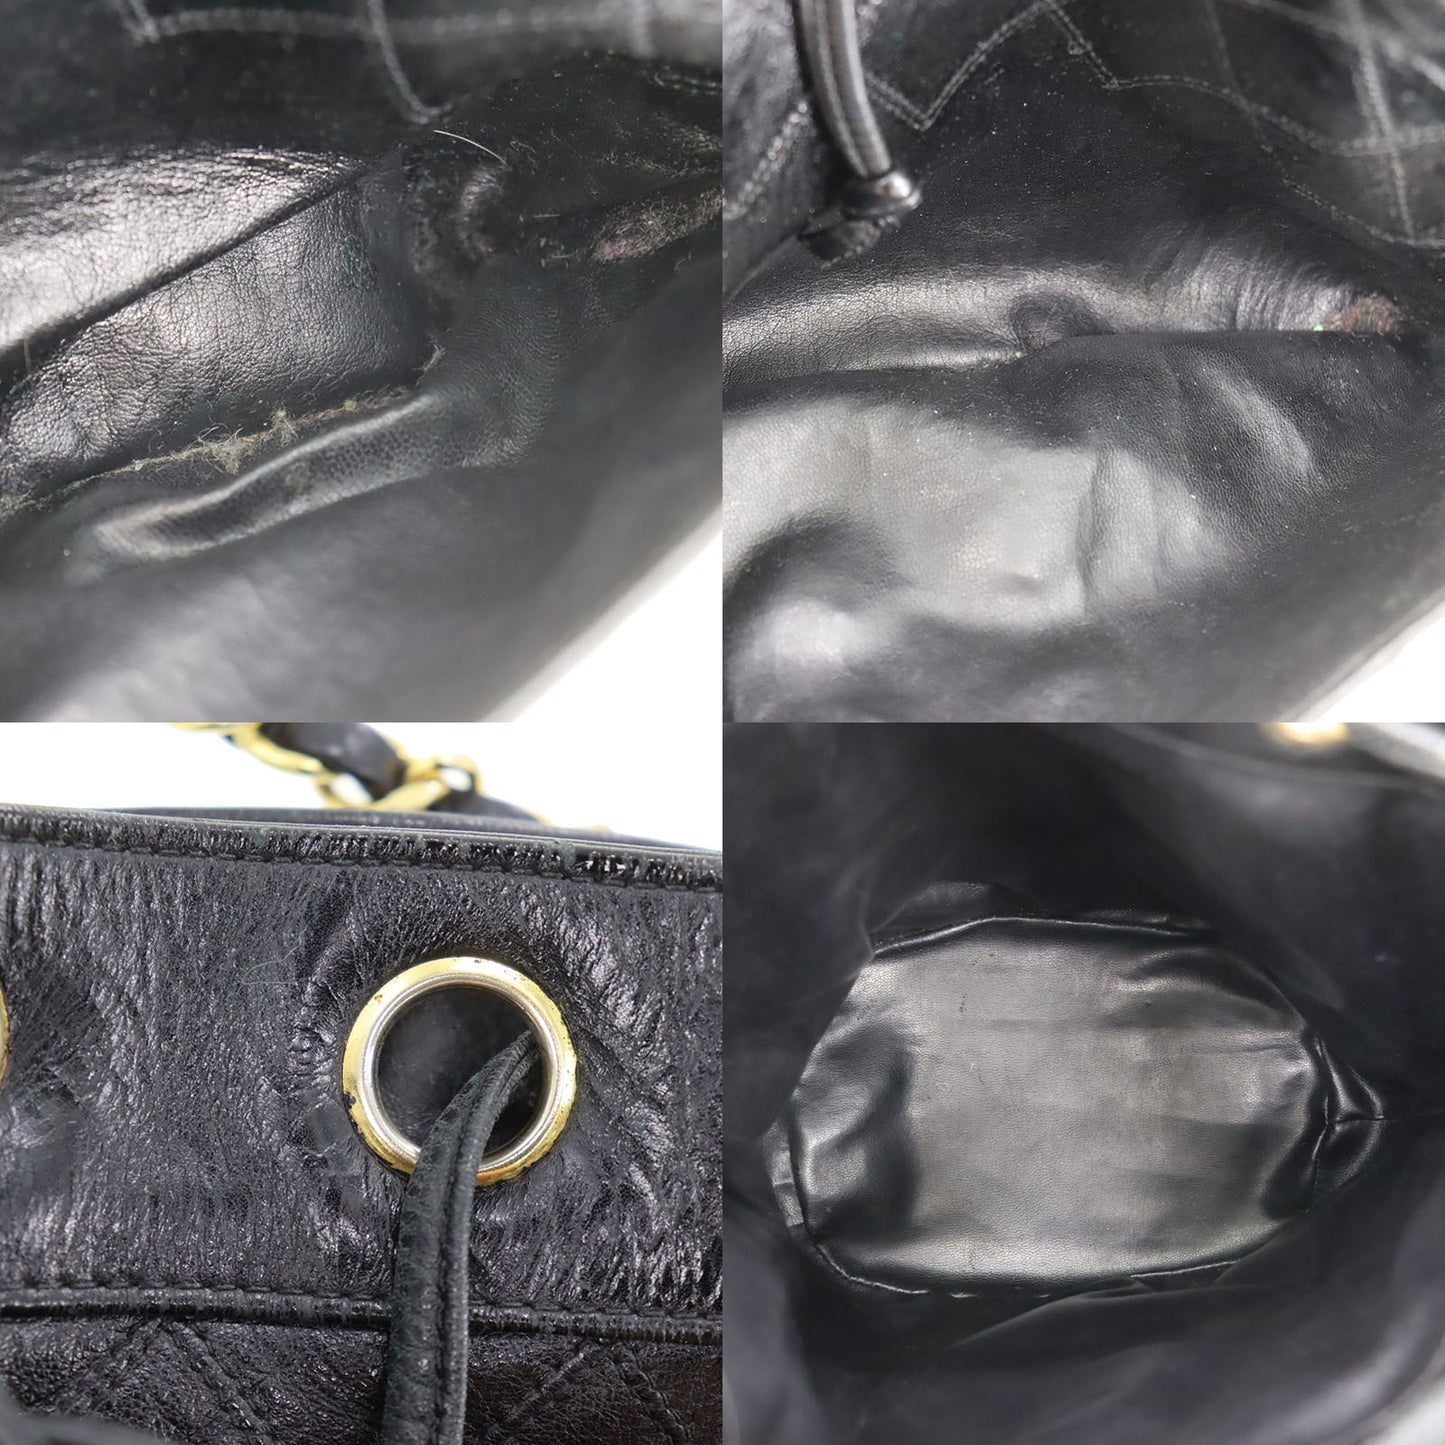 CHANEL Bicolore Shoulder Bag Black Lambskin #CK784